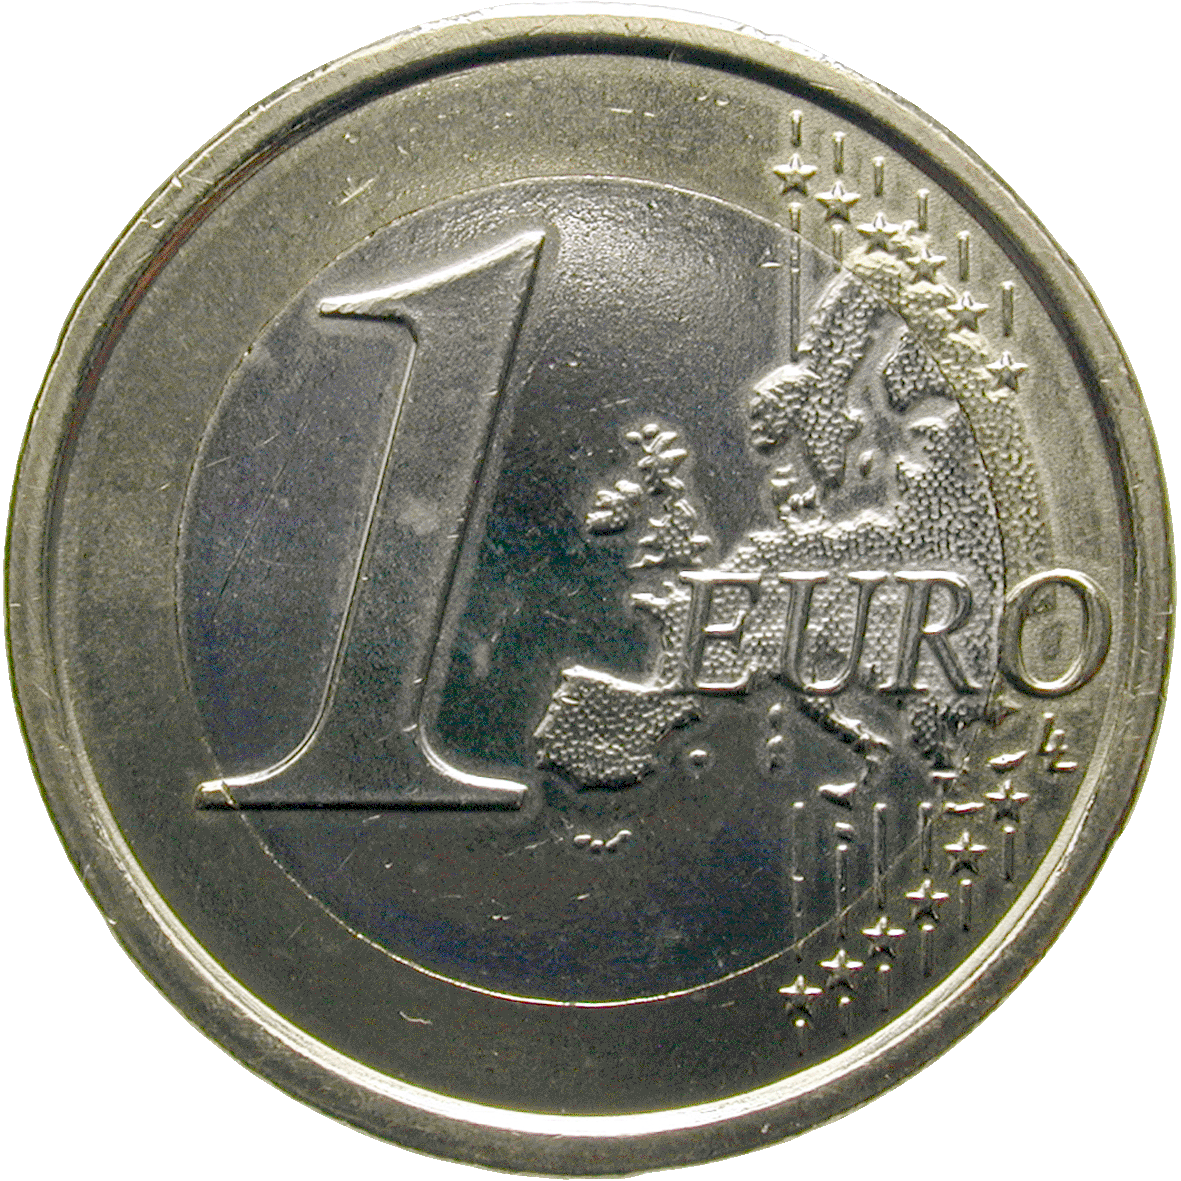 Republic of San Marino, 1 Euro 2009 (obverse)